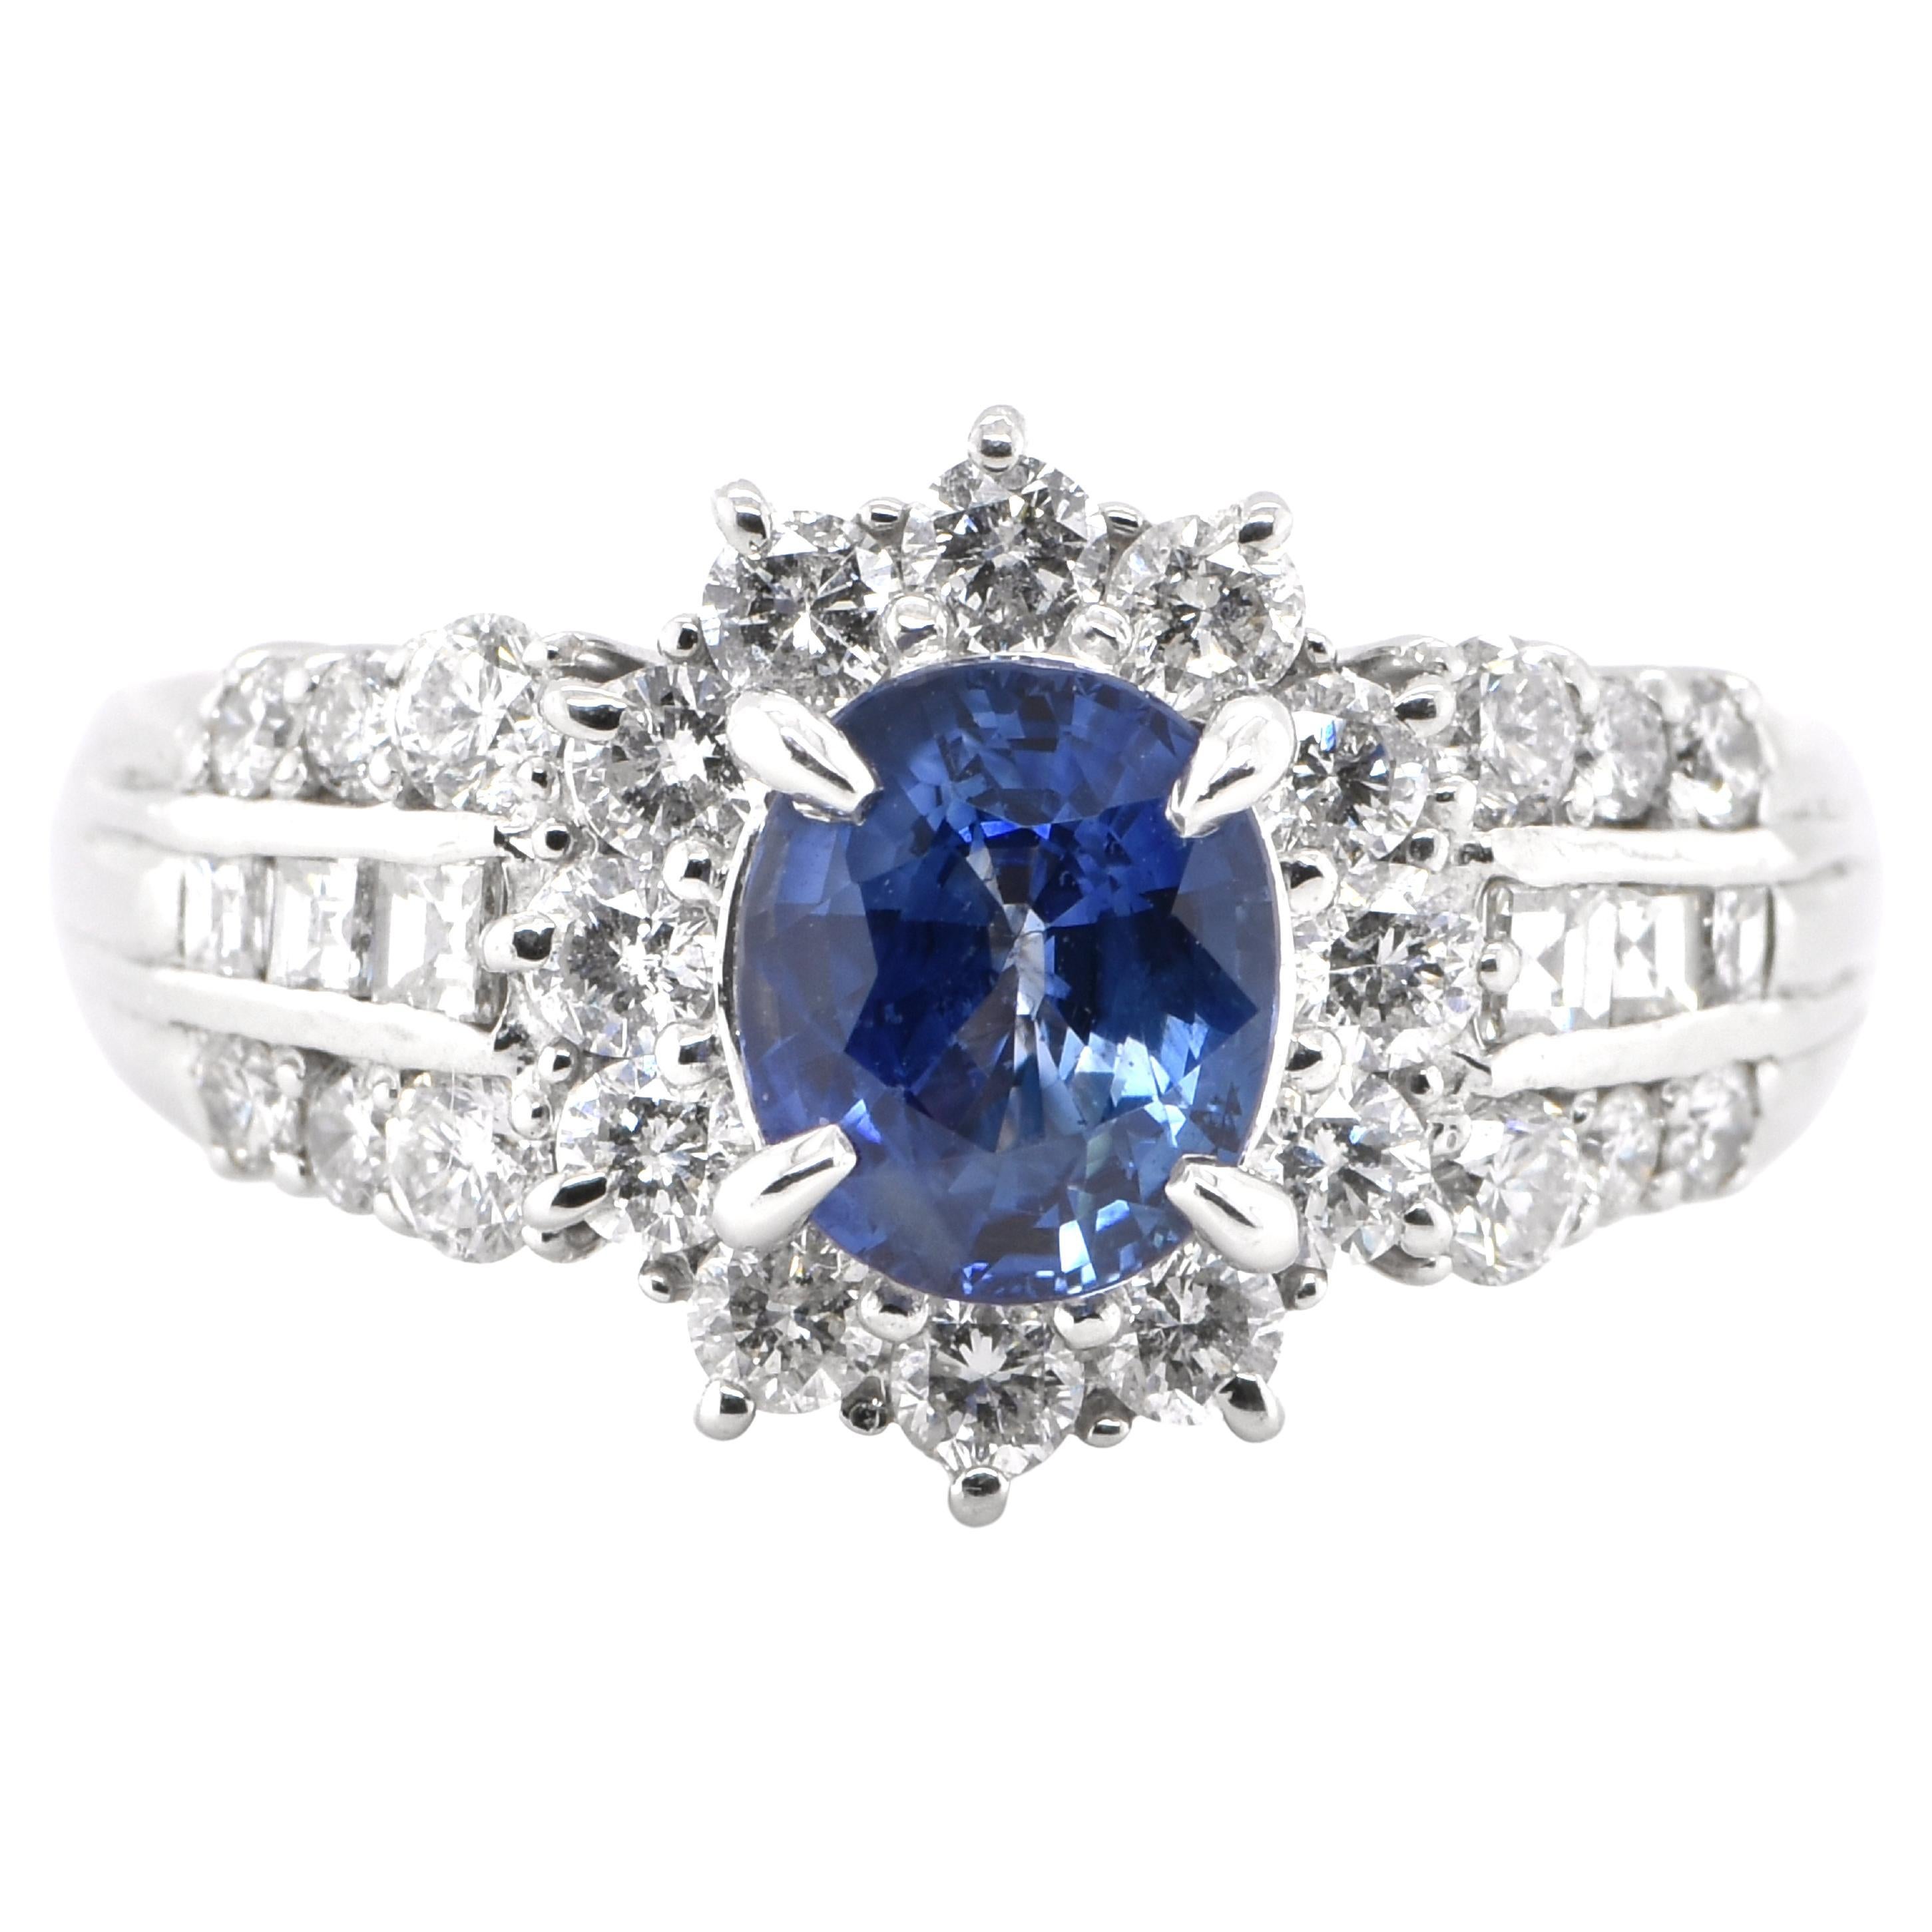 1.64 Carat Vintage Natural Sapphire and Diamond Ring Set in Platinum